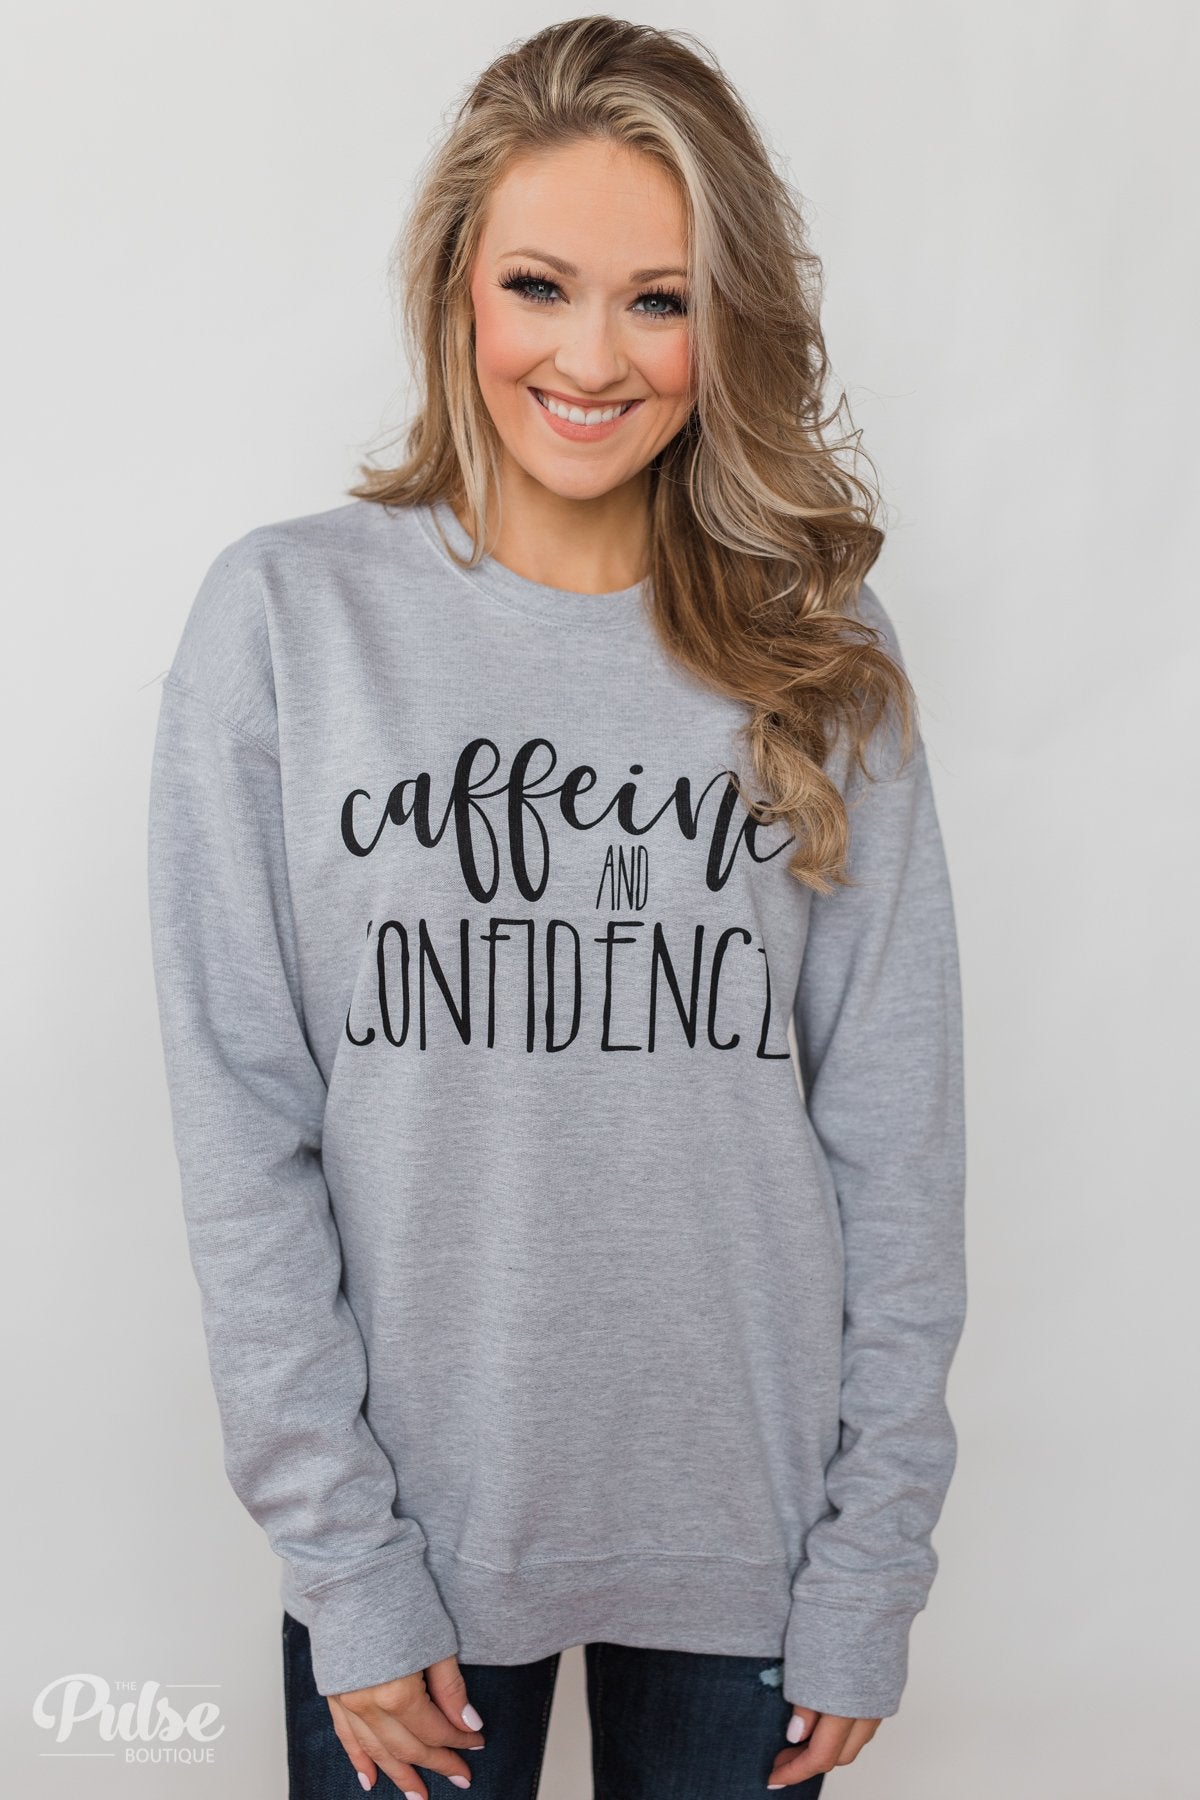 "Caffeine & Confidence" Crew Neck - Heather Grey